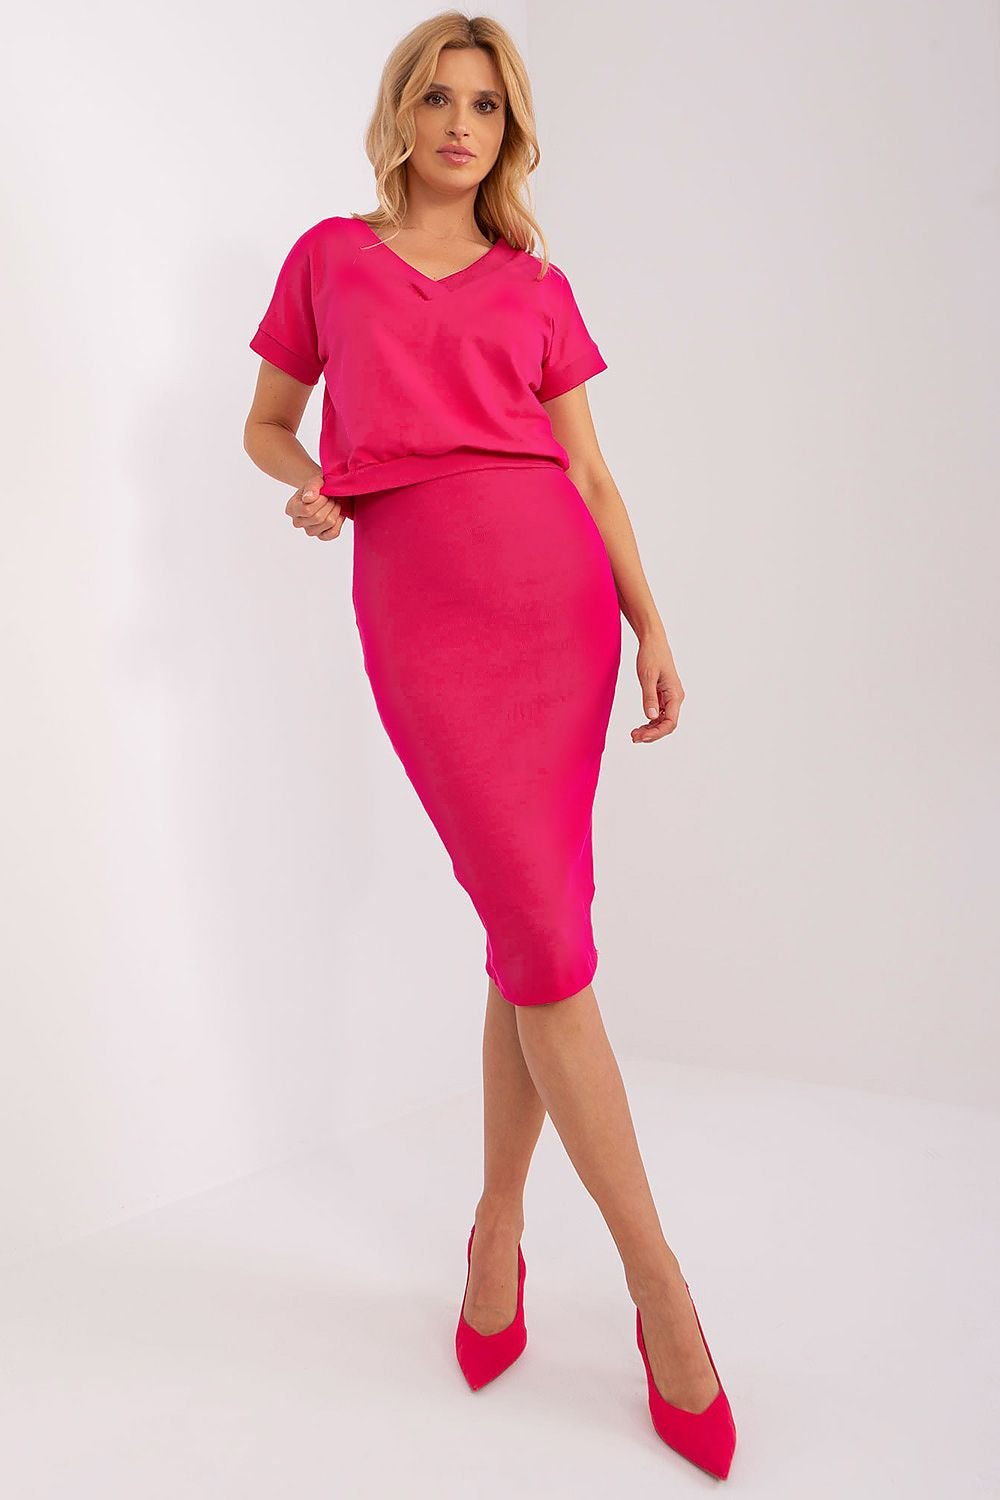 Ashli Loose Blouse Heart Neckline Bodycon Dress Set - Hot Pink